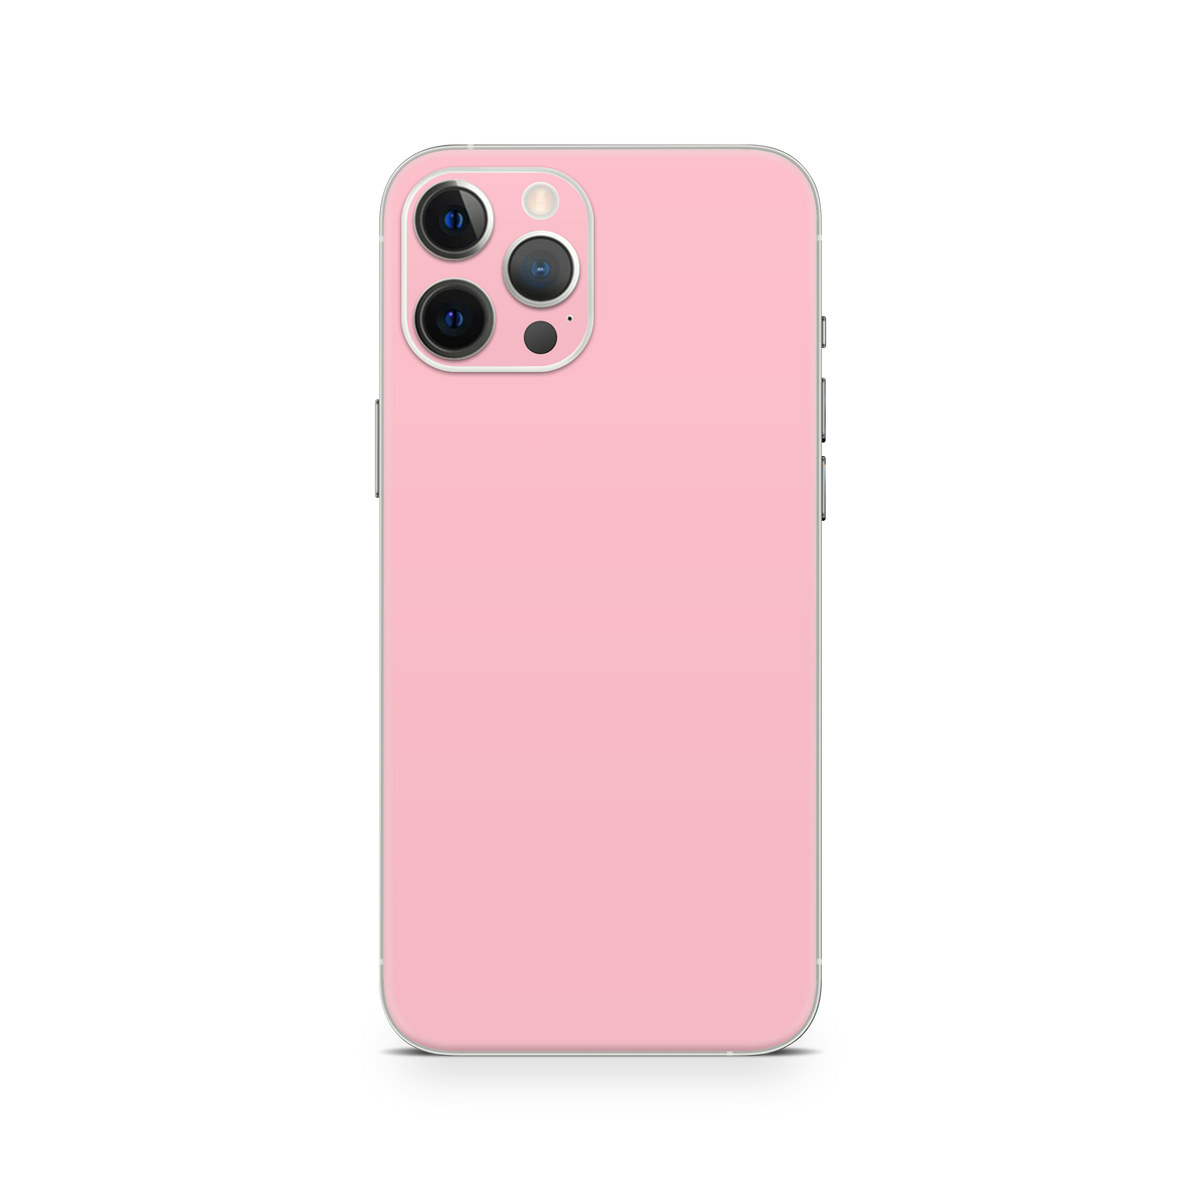 Apple iPhone 12 Pro max Blush Pink Skin